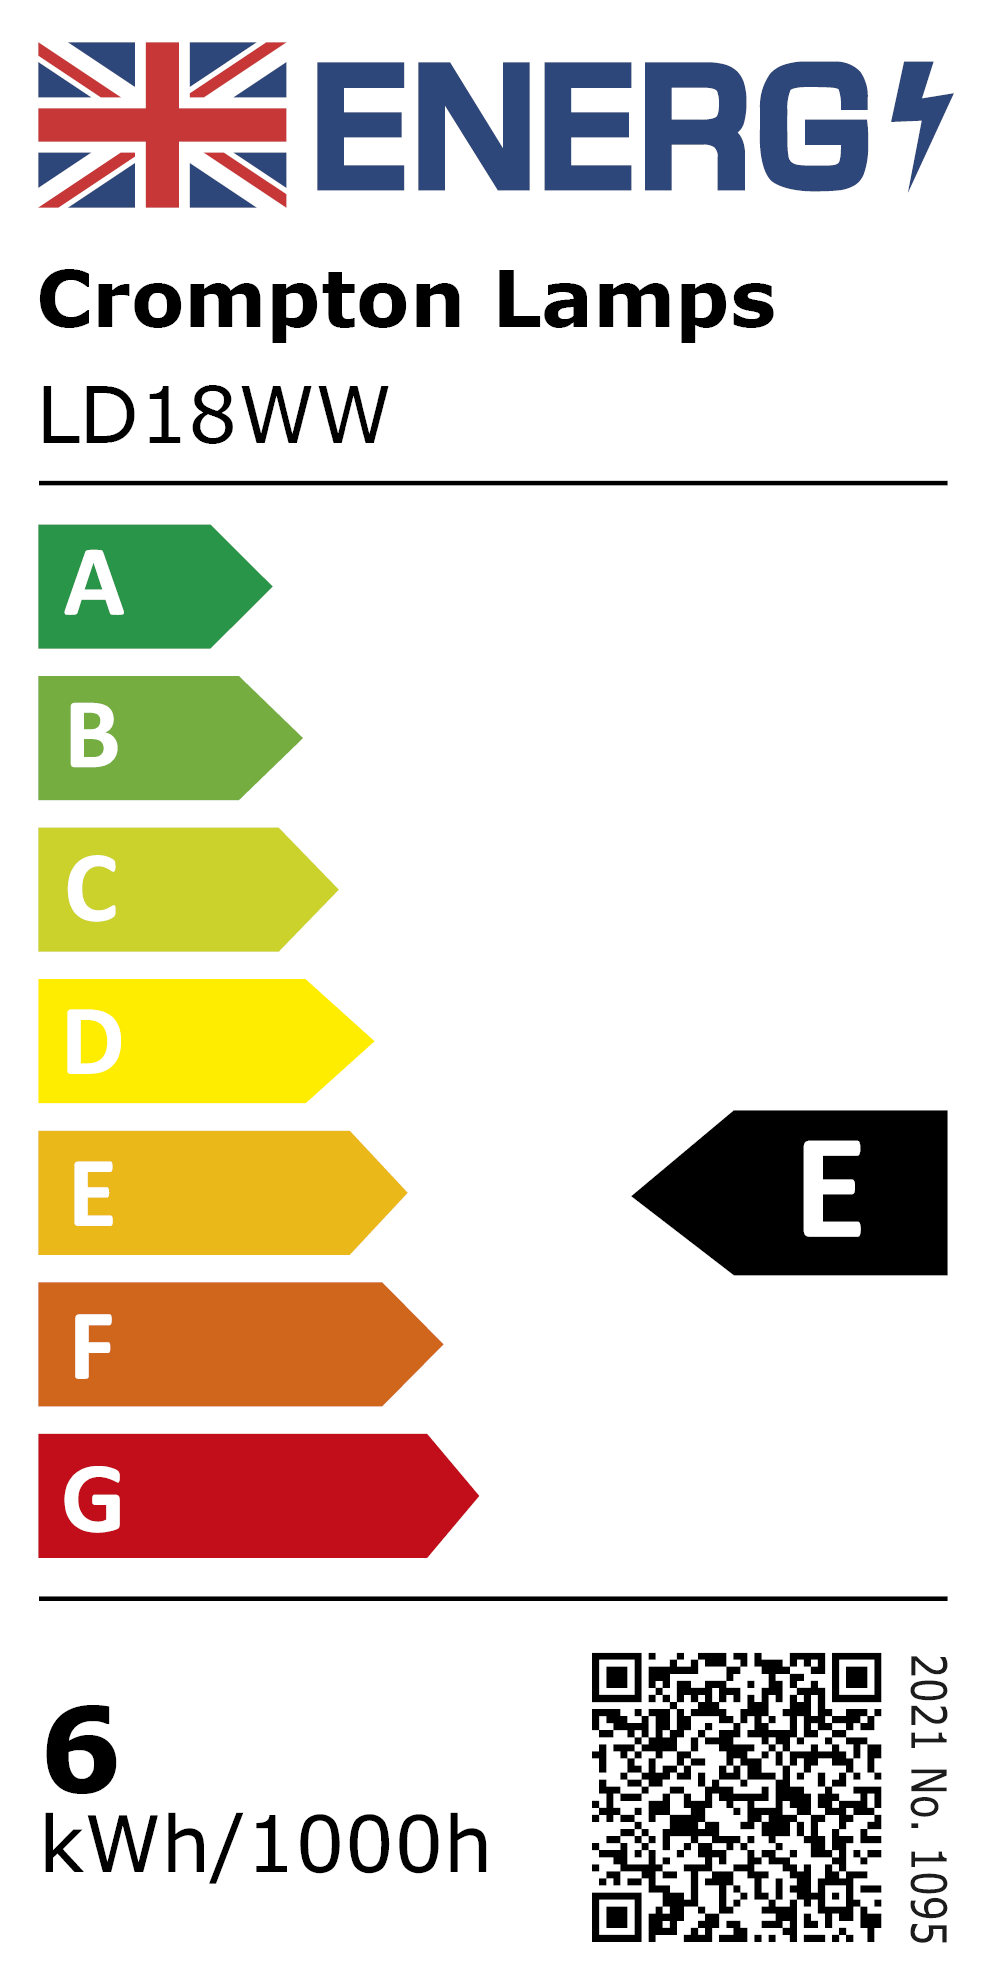 New 2021 Energy Rating Label: MPN LD18WW